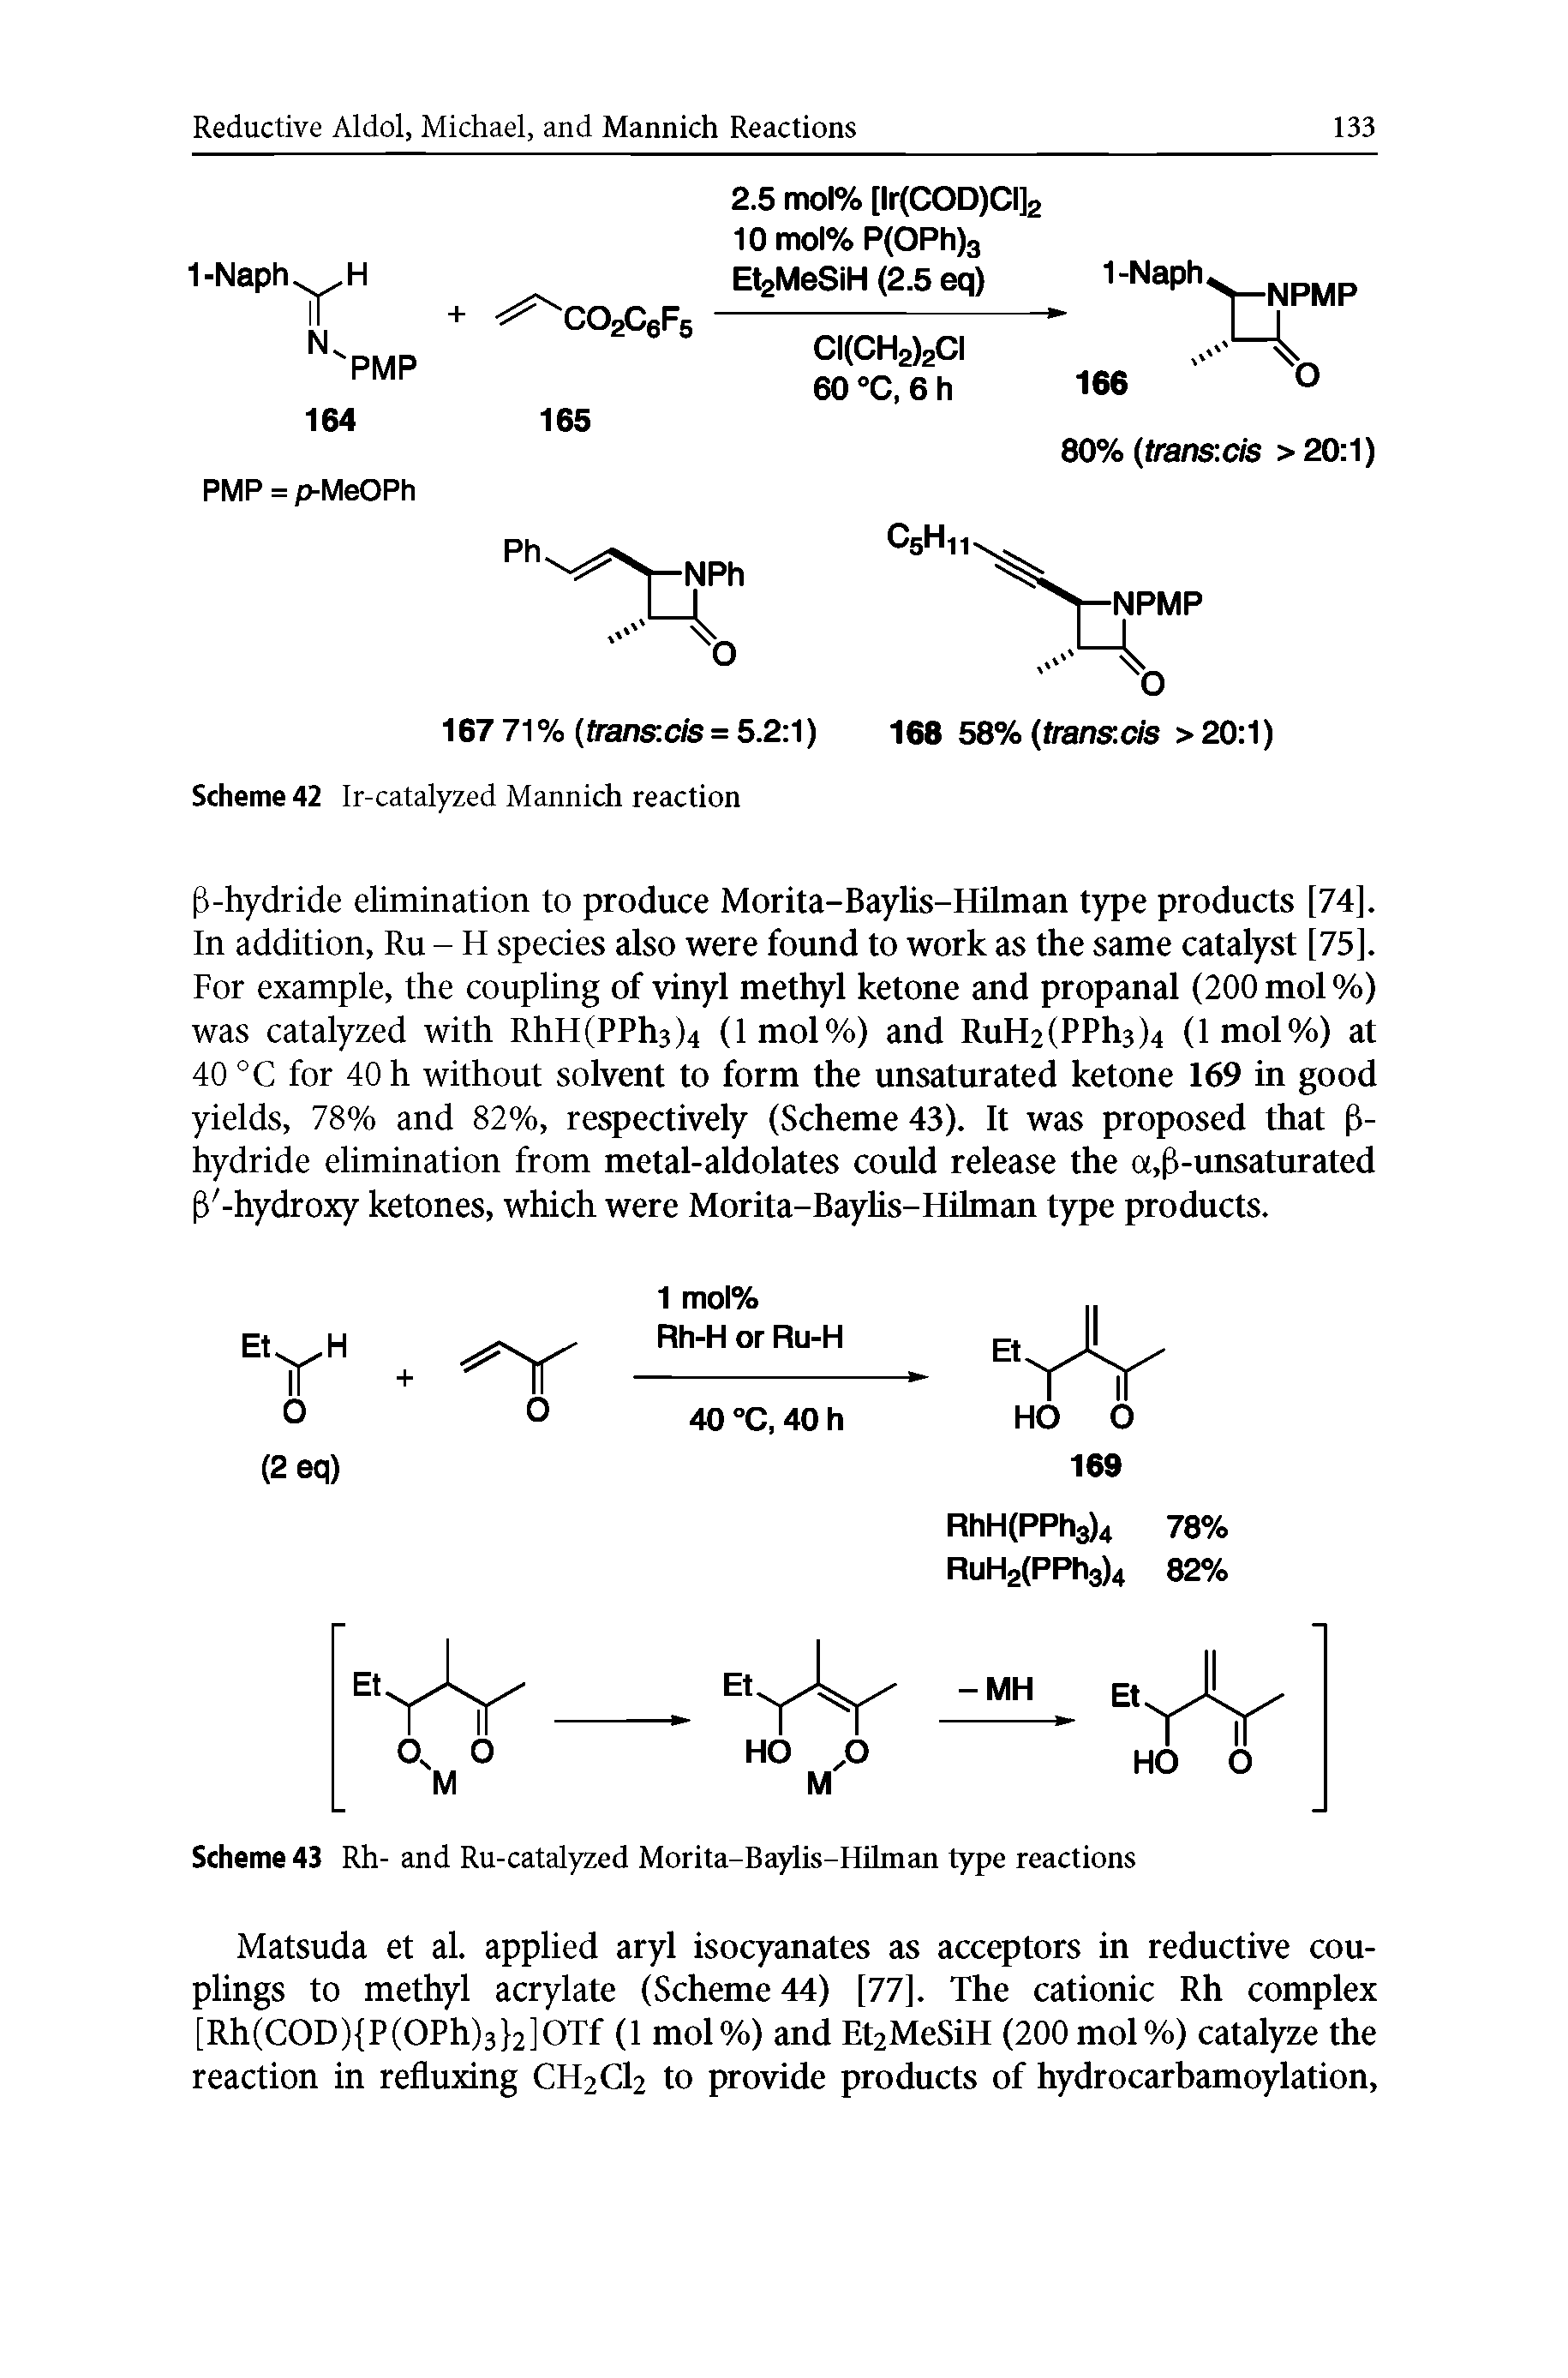 Scheme 43 Rh- and Ru-catalyzed Morita-Baylis-Hilman type reactions...